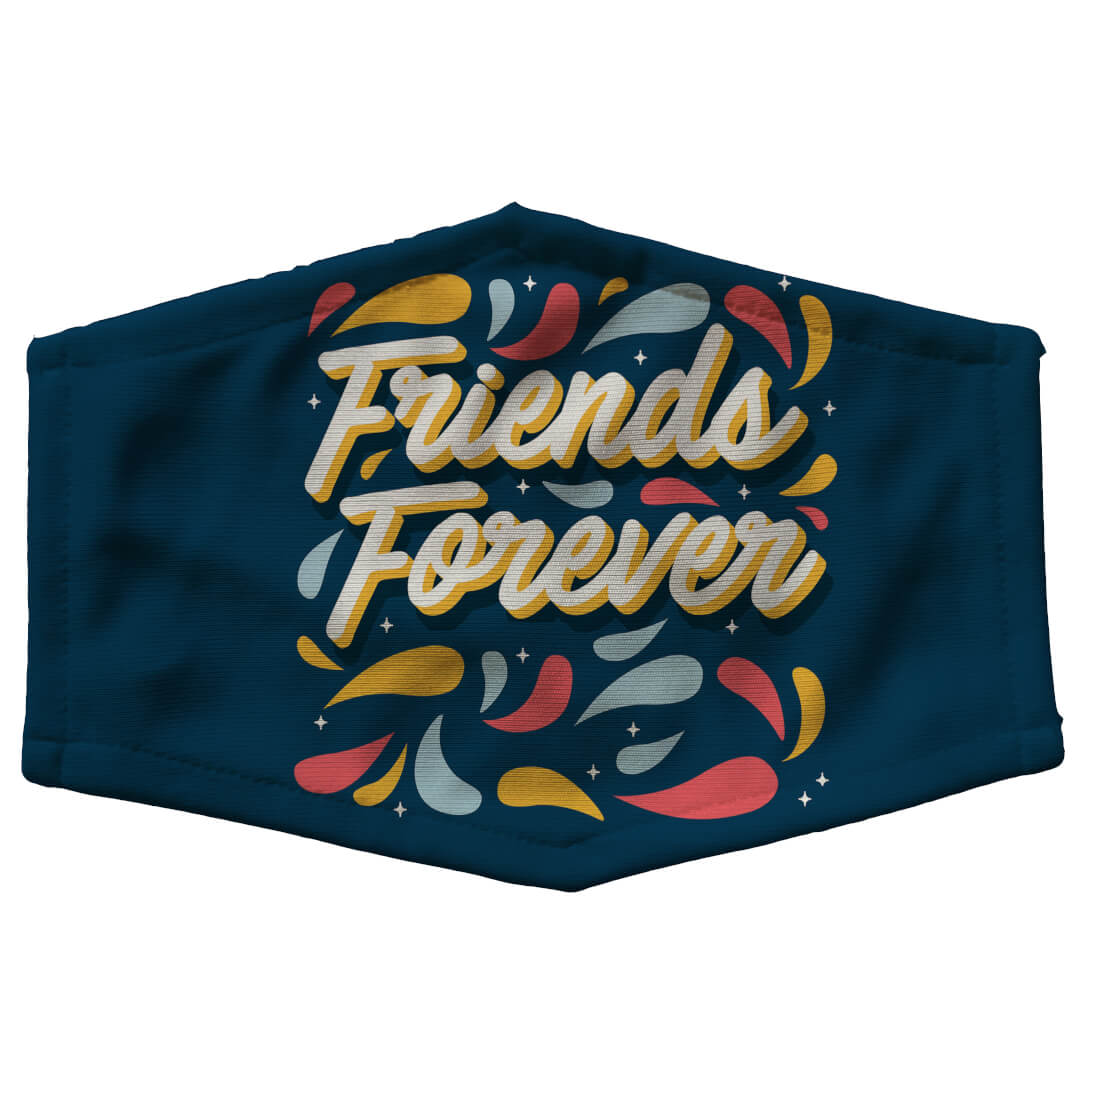 Friends Forever Mask